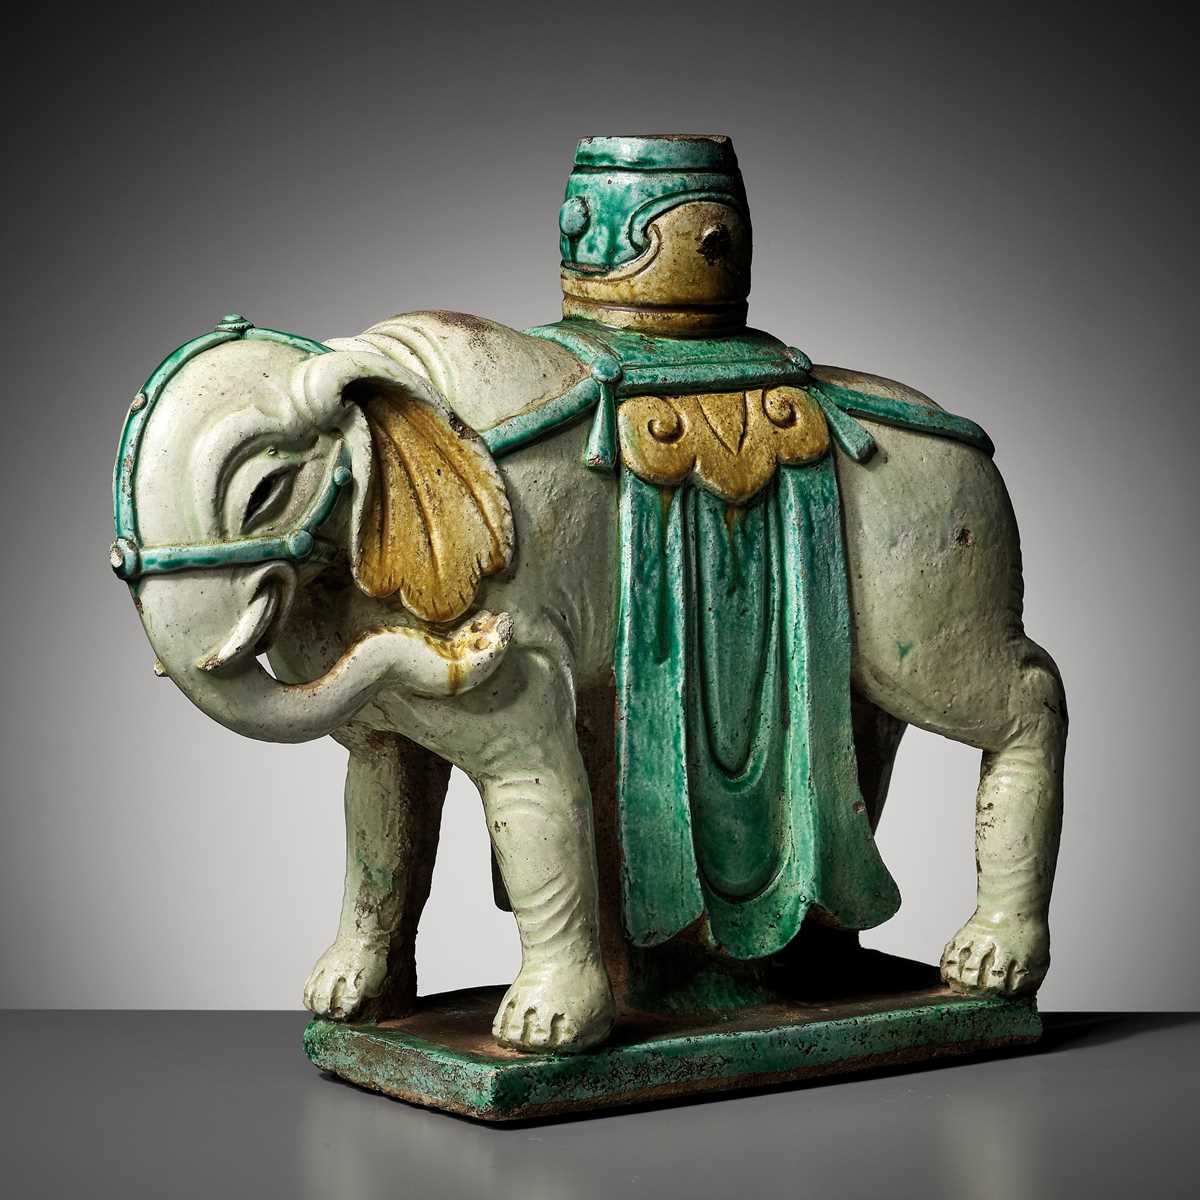 Lot 77 - A SANCAI-GLAZED ‘ELEPHANT’ CANDLEHOLDER, MING DYNASTY